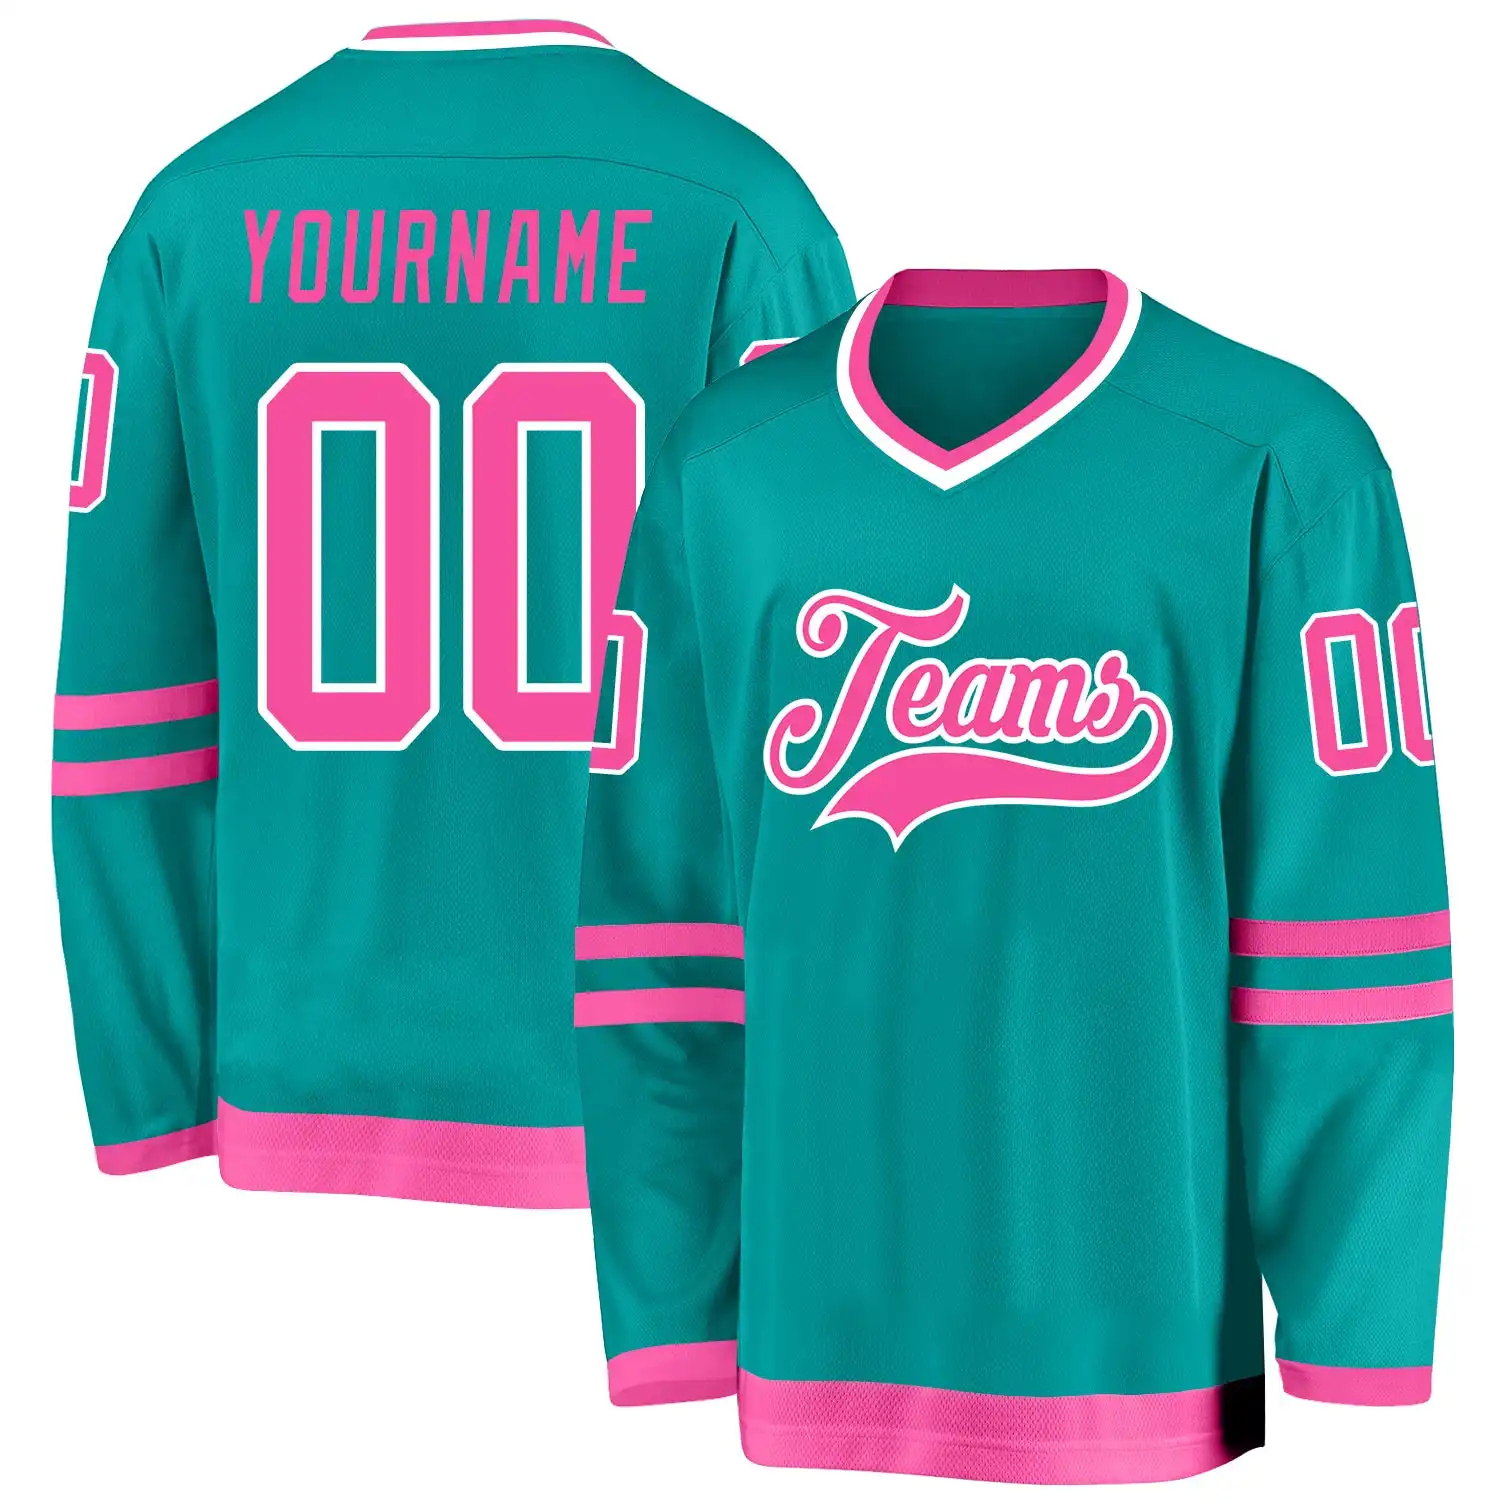 Stitched And Print Aqua Pink-white Hockey Jersey Custom